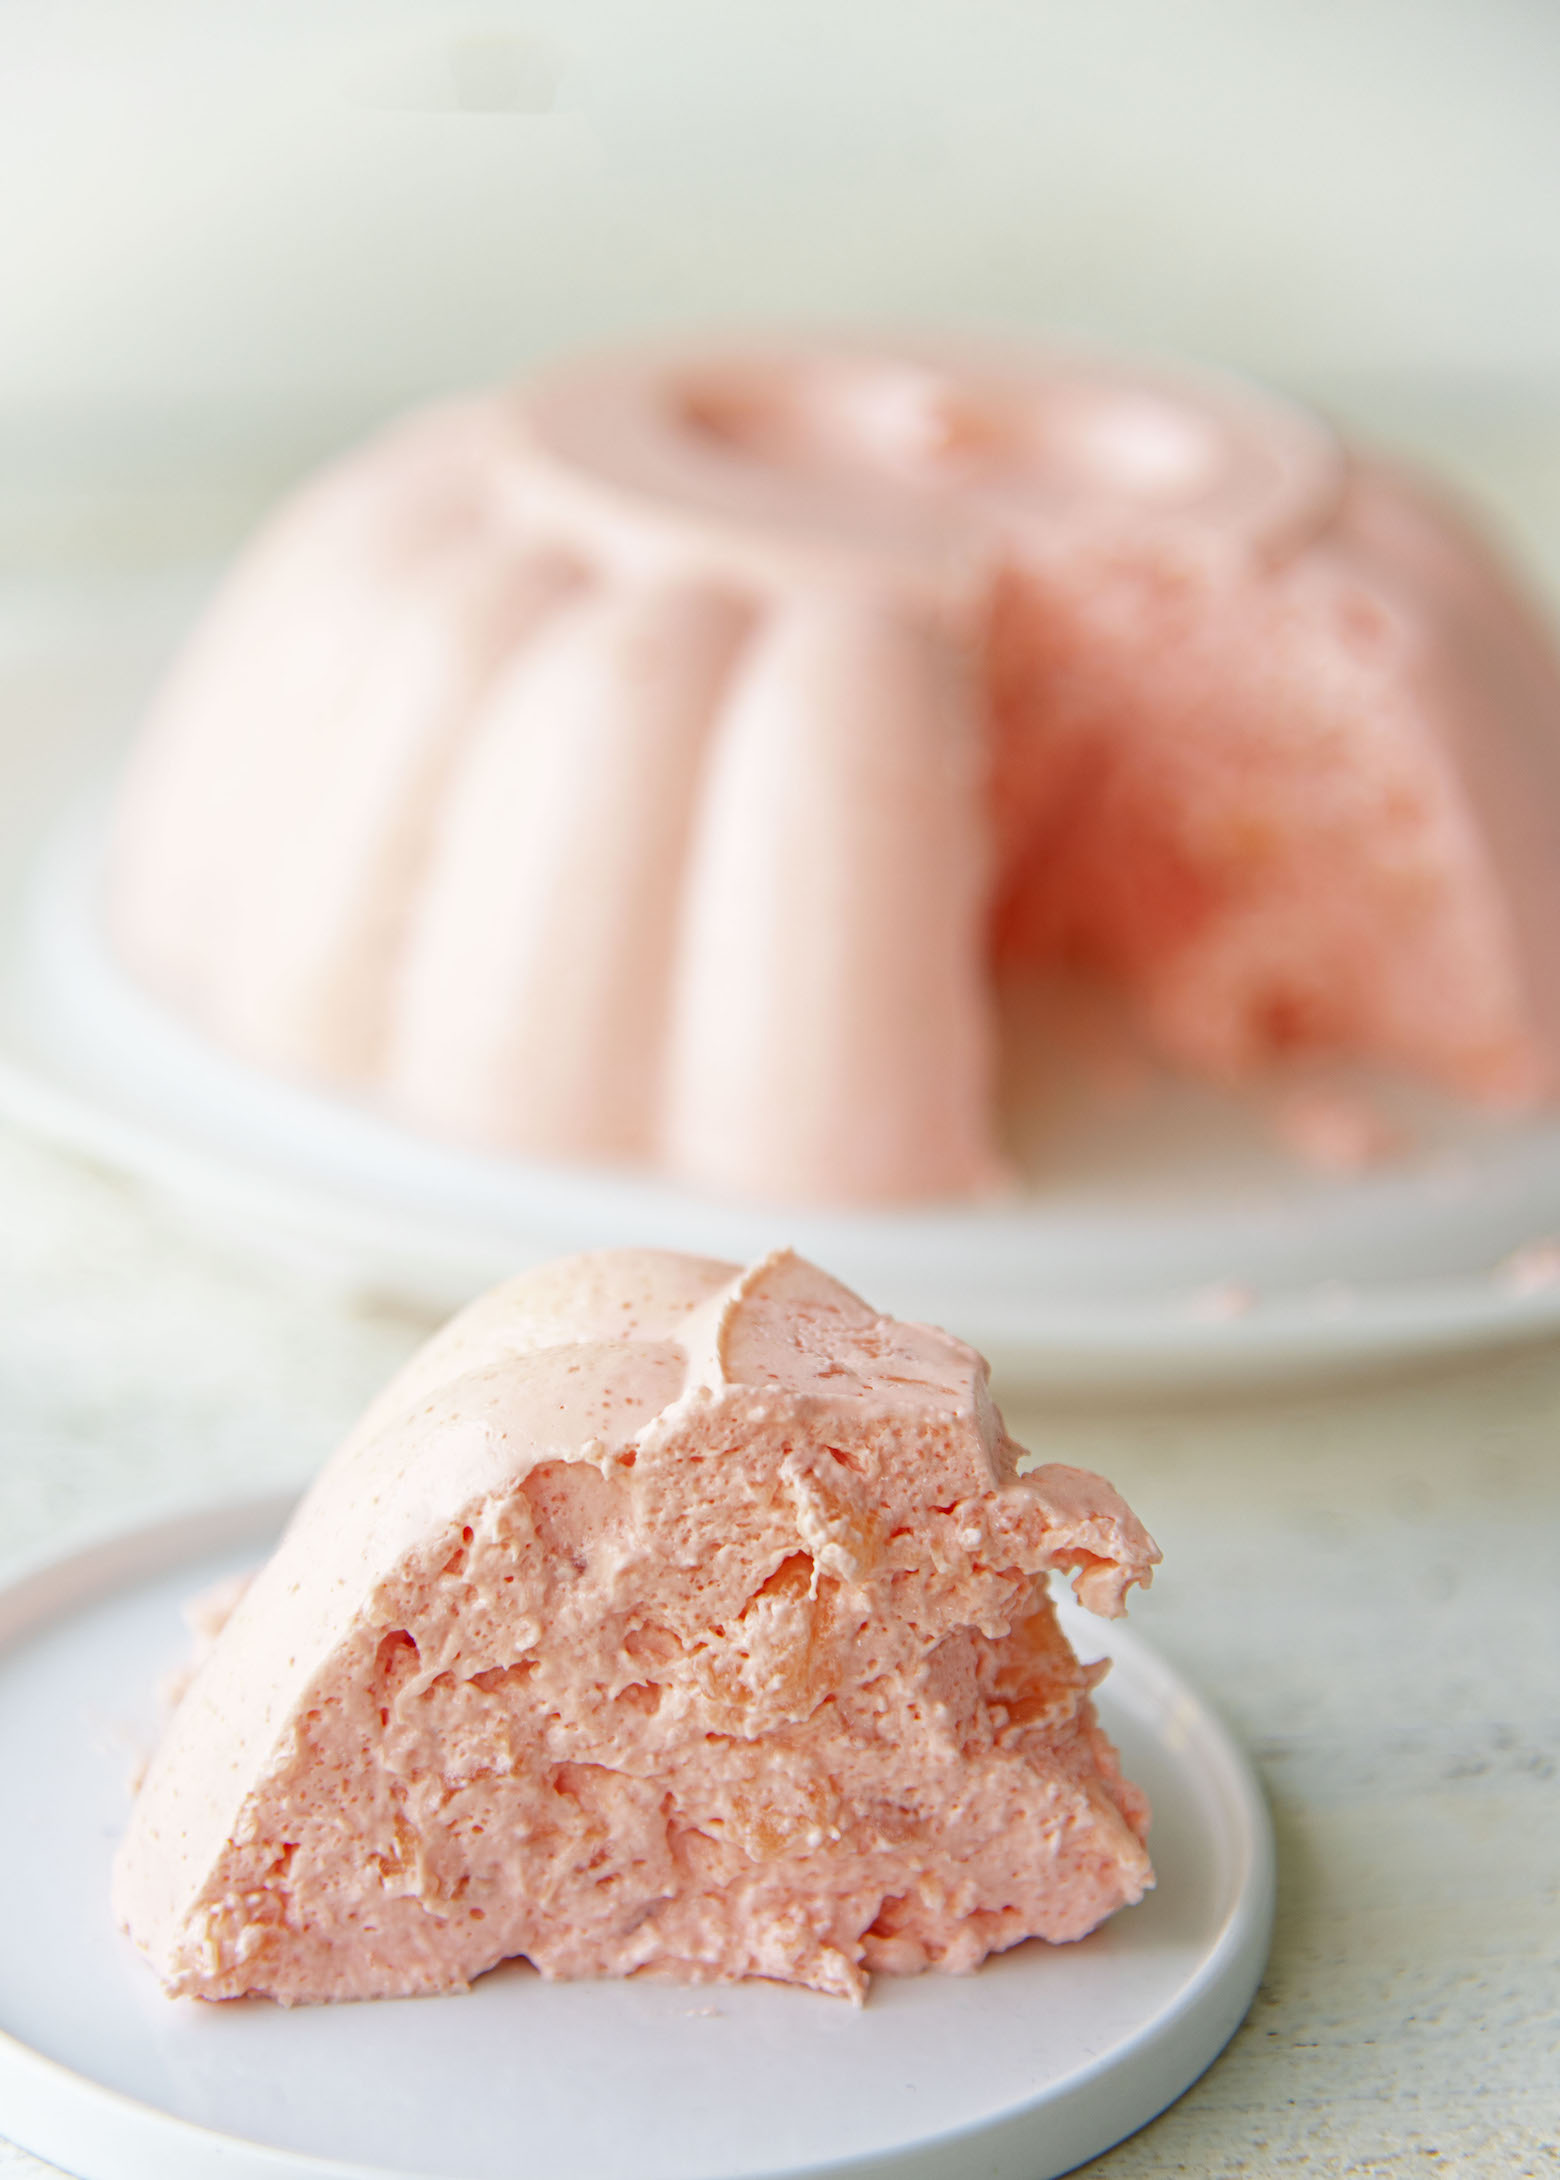 Creamy Strawberry Gelatin Mini Molds Recipe 